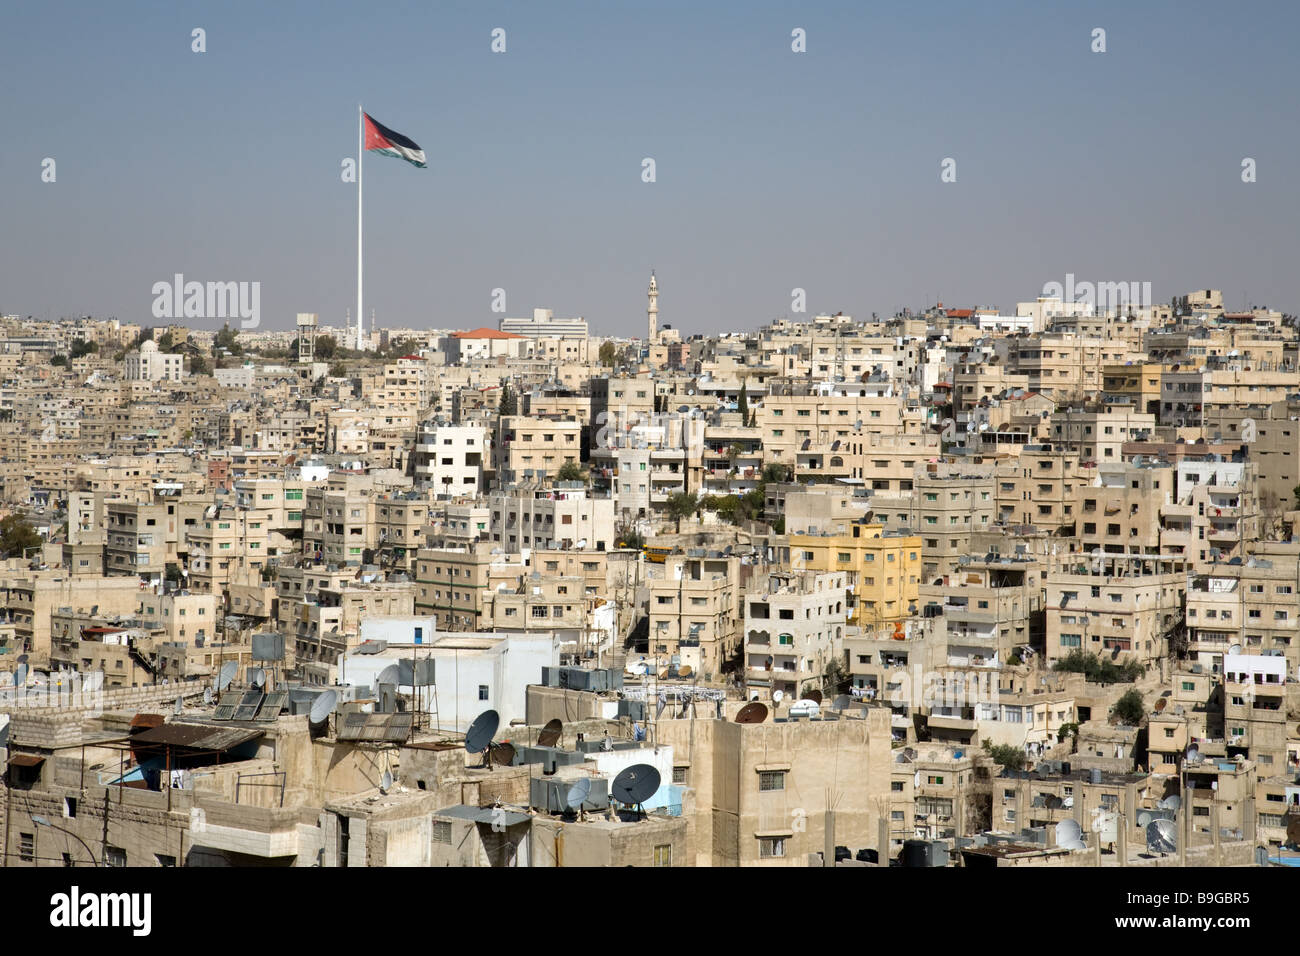 The city of Amman with the Jordanian flag flying; Jordan Stock Photo